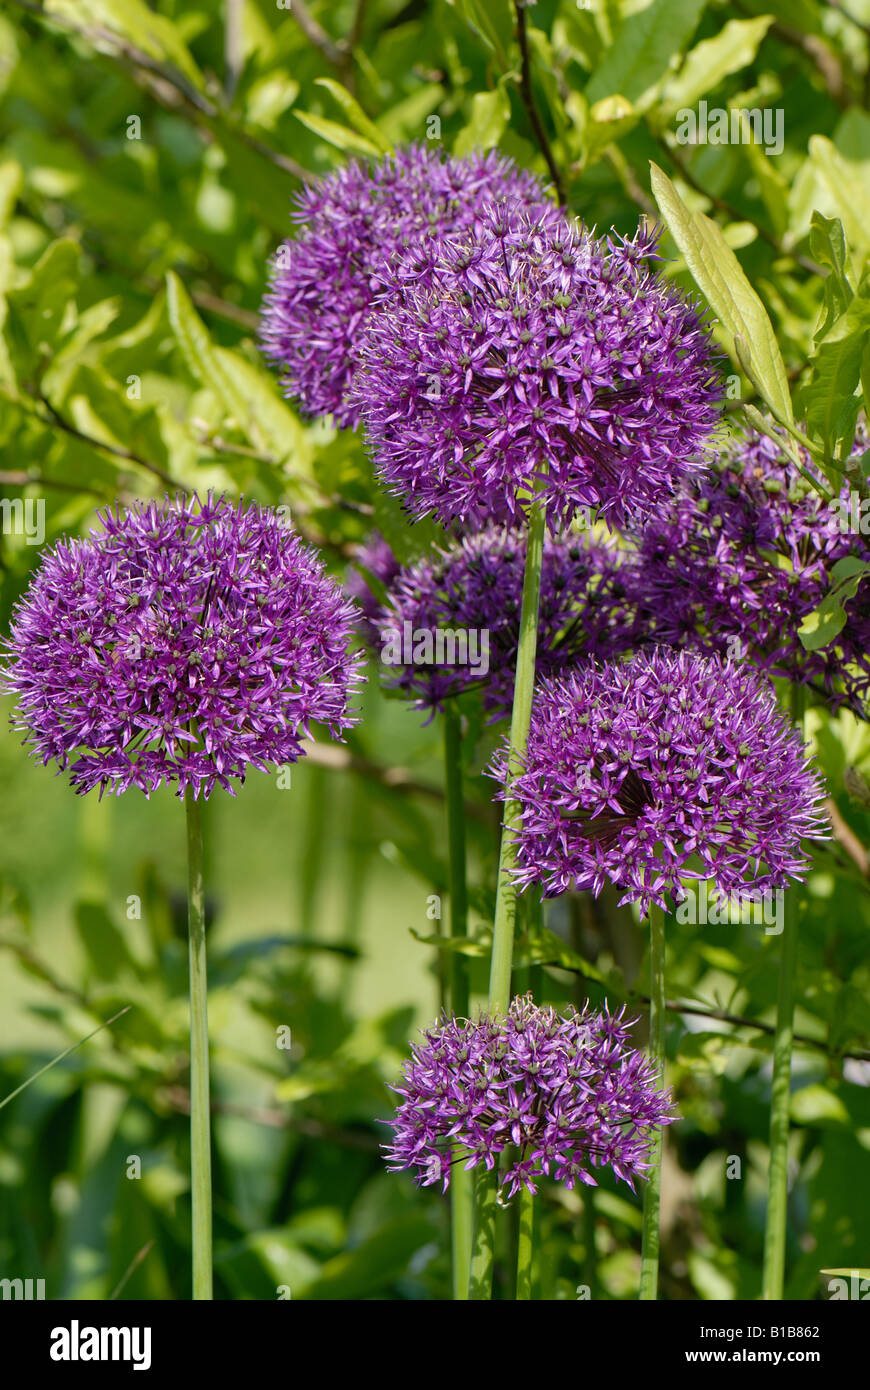 Allium Purple Sensation flowers on ornamental garden plants Stock Photo